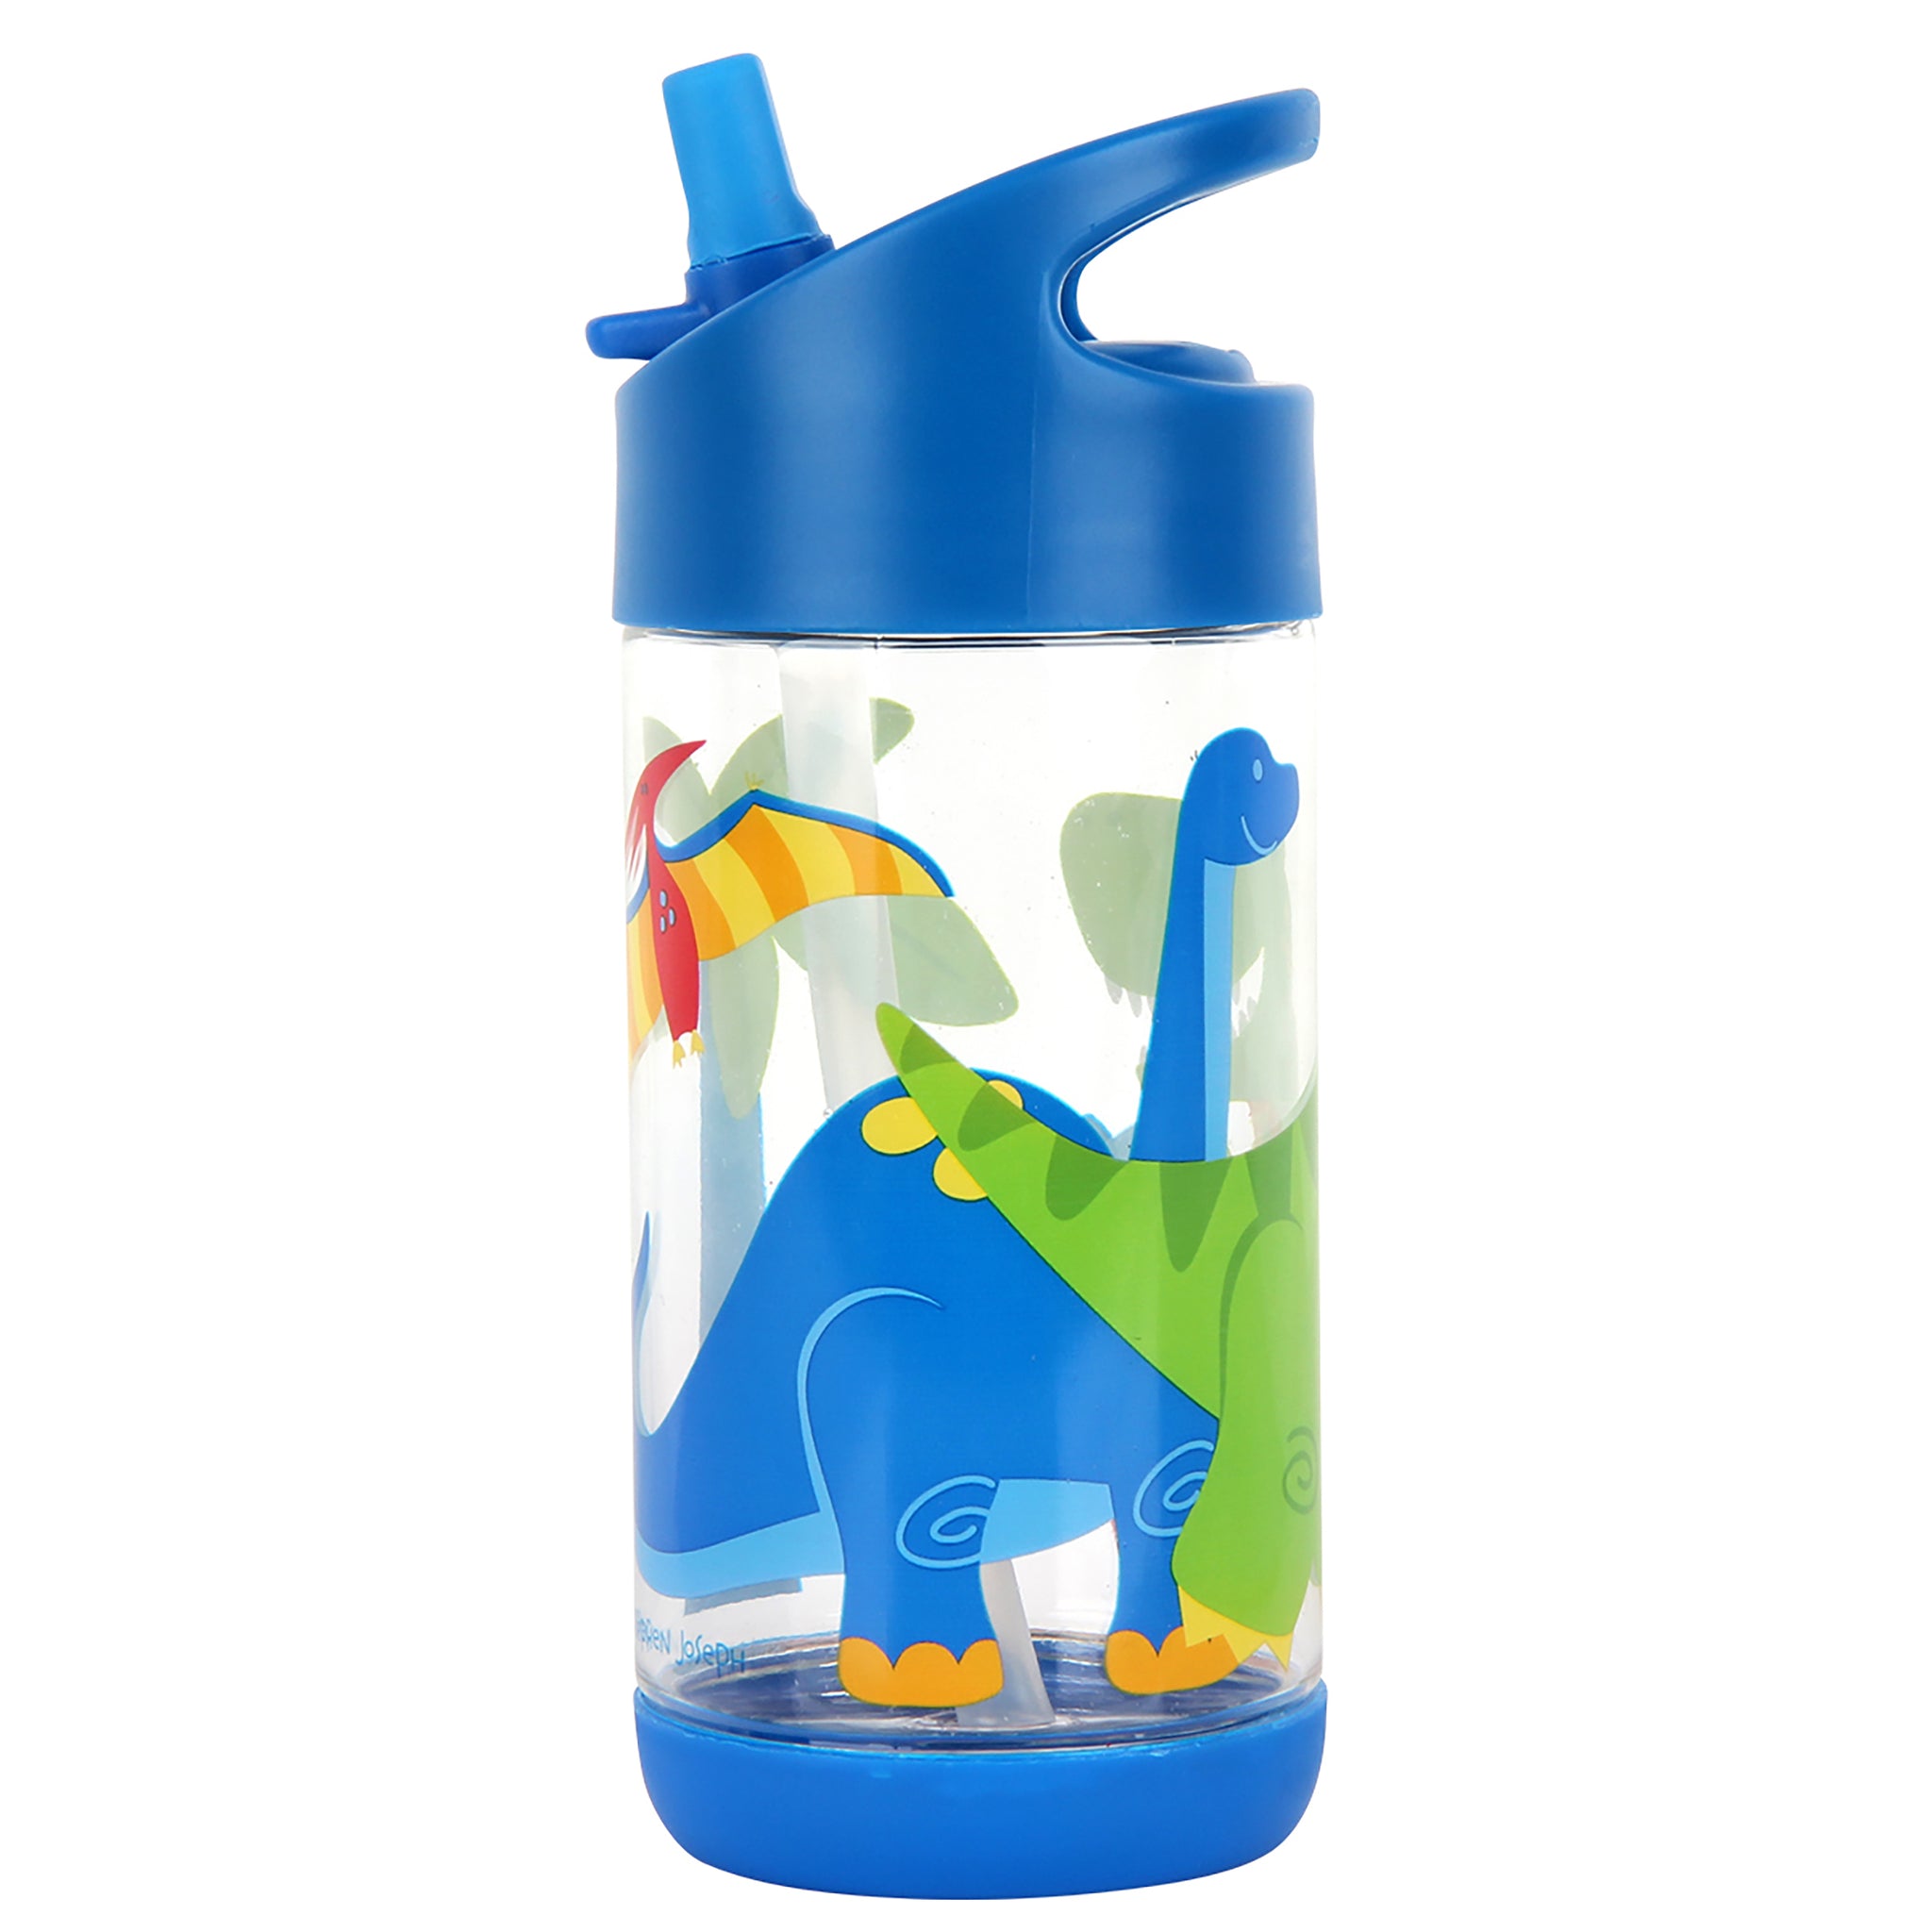 Botella Flip Top de Dinosaurio